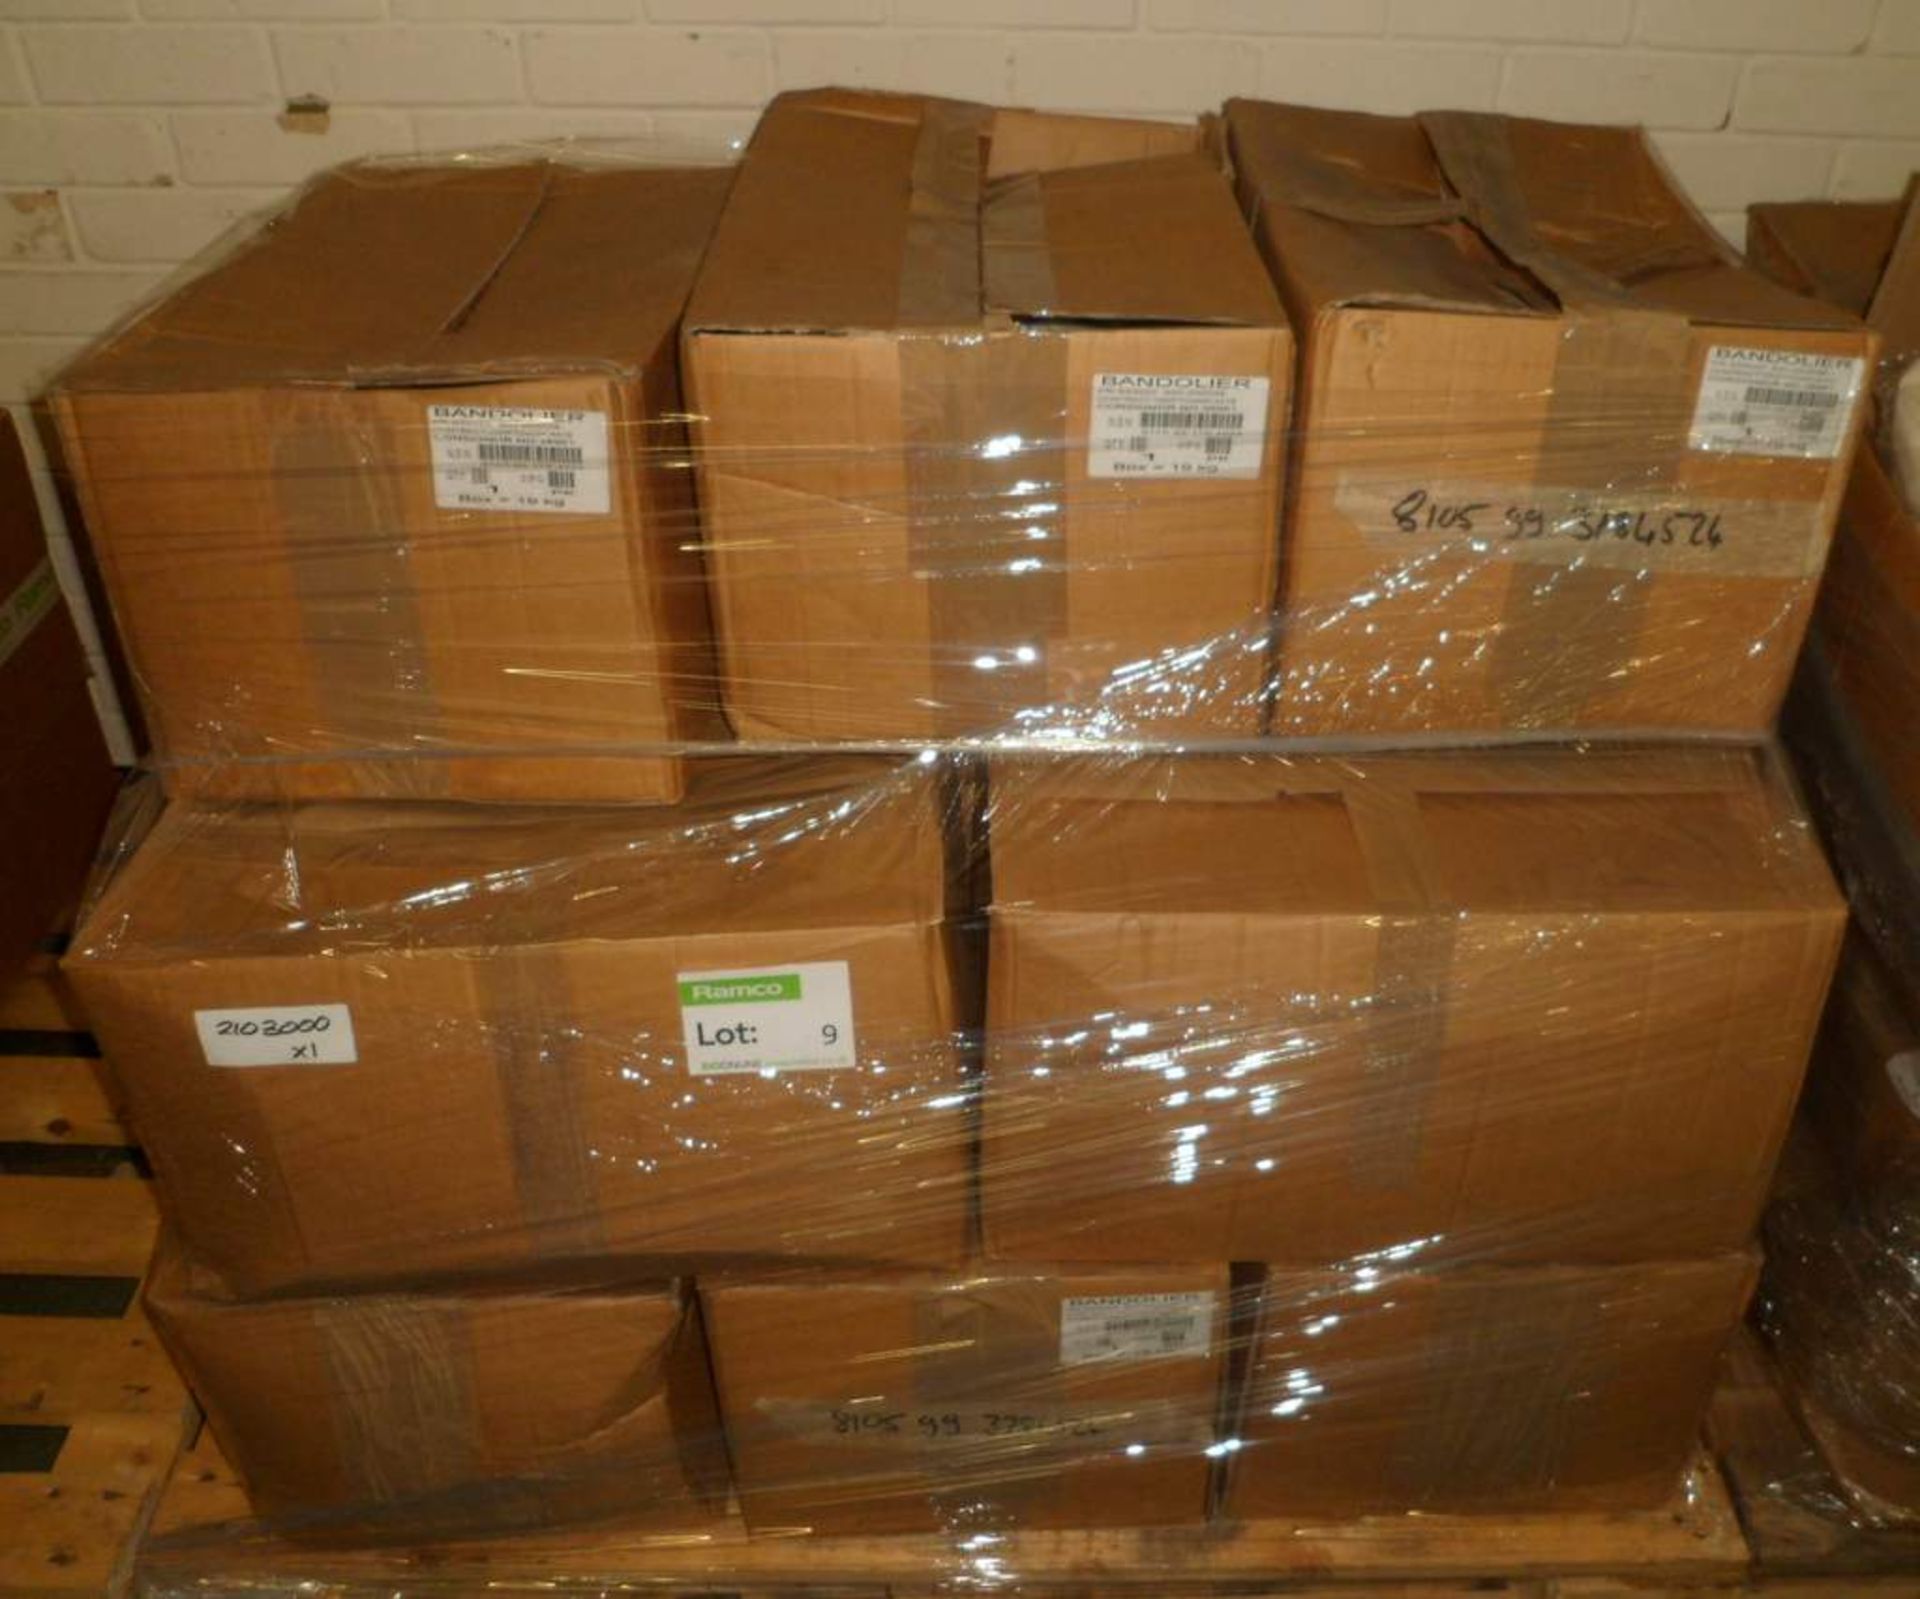 13x Boxes of Bandolier - 19kg Box